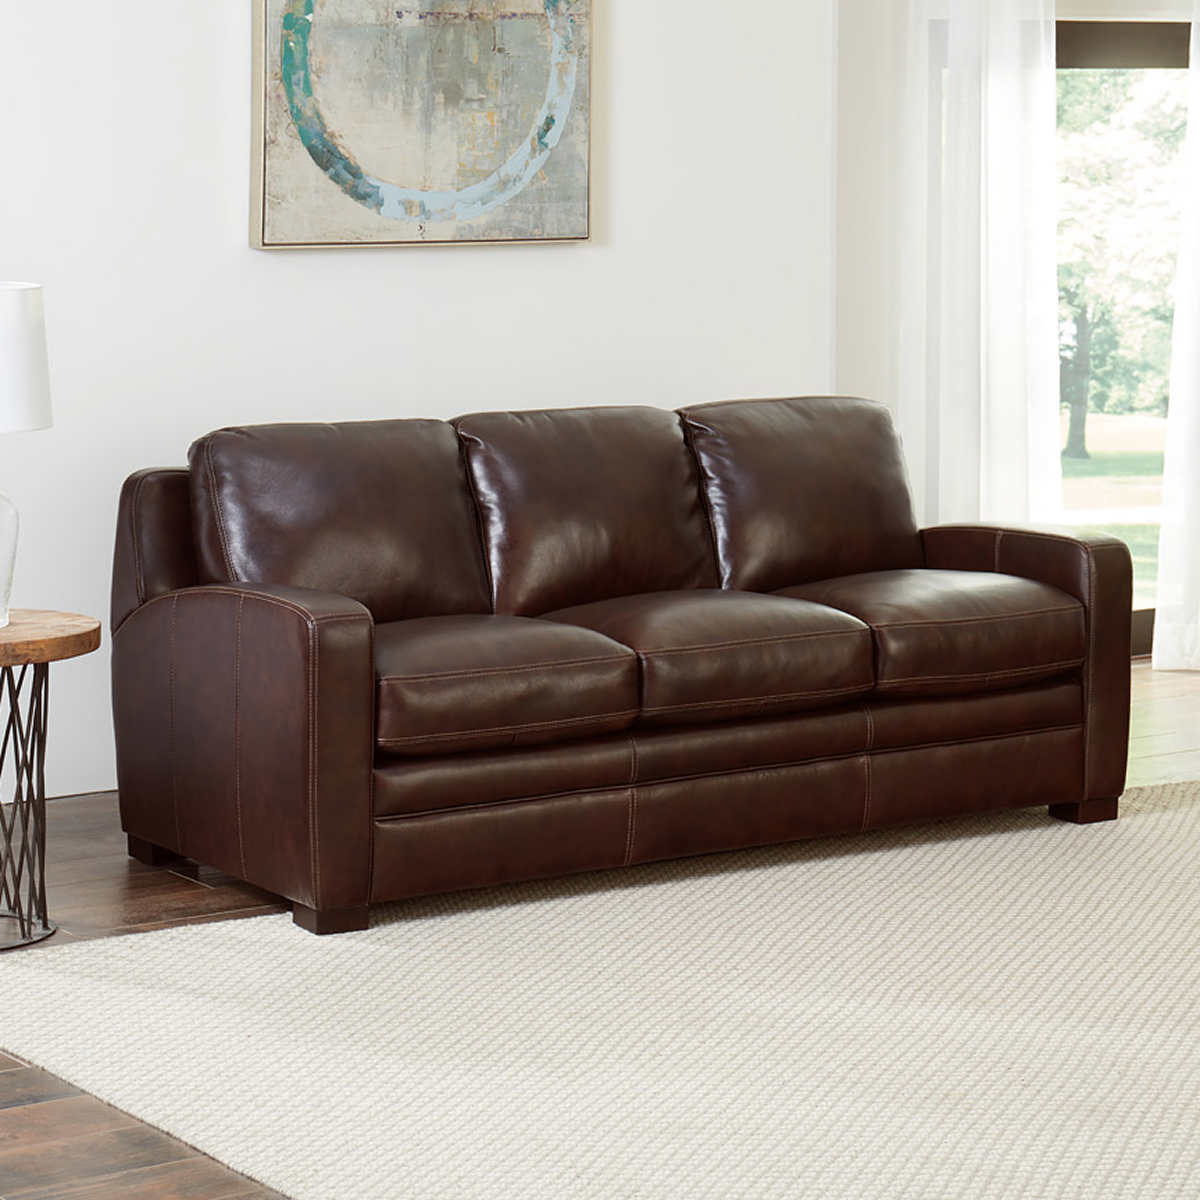 Kalana Leather Sleeper Sofa Costco, Tan Leather Loveseat Sleeper